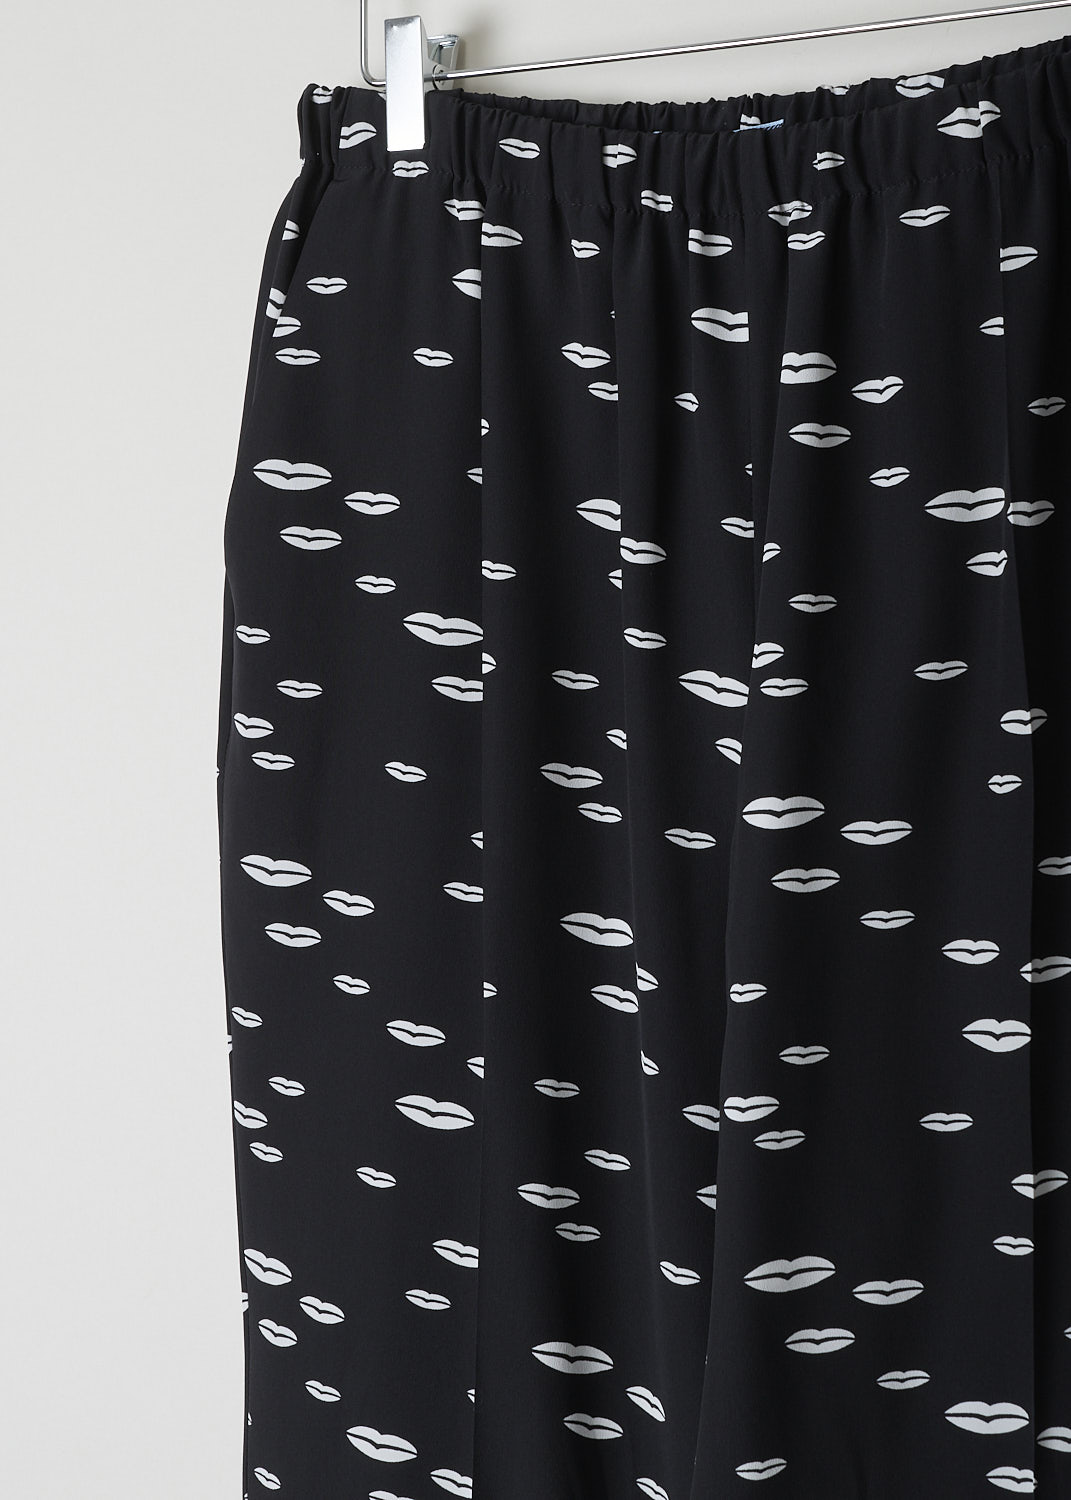 Black silk pants with white lip print at Kiki's Stocksale